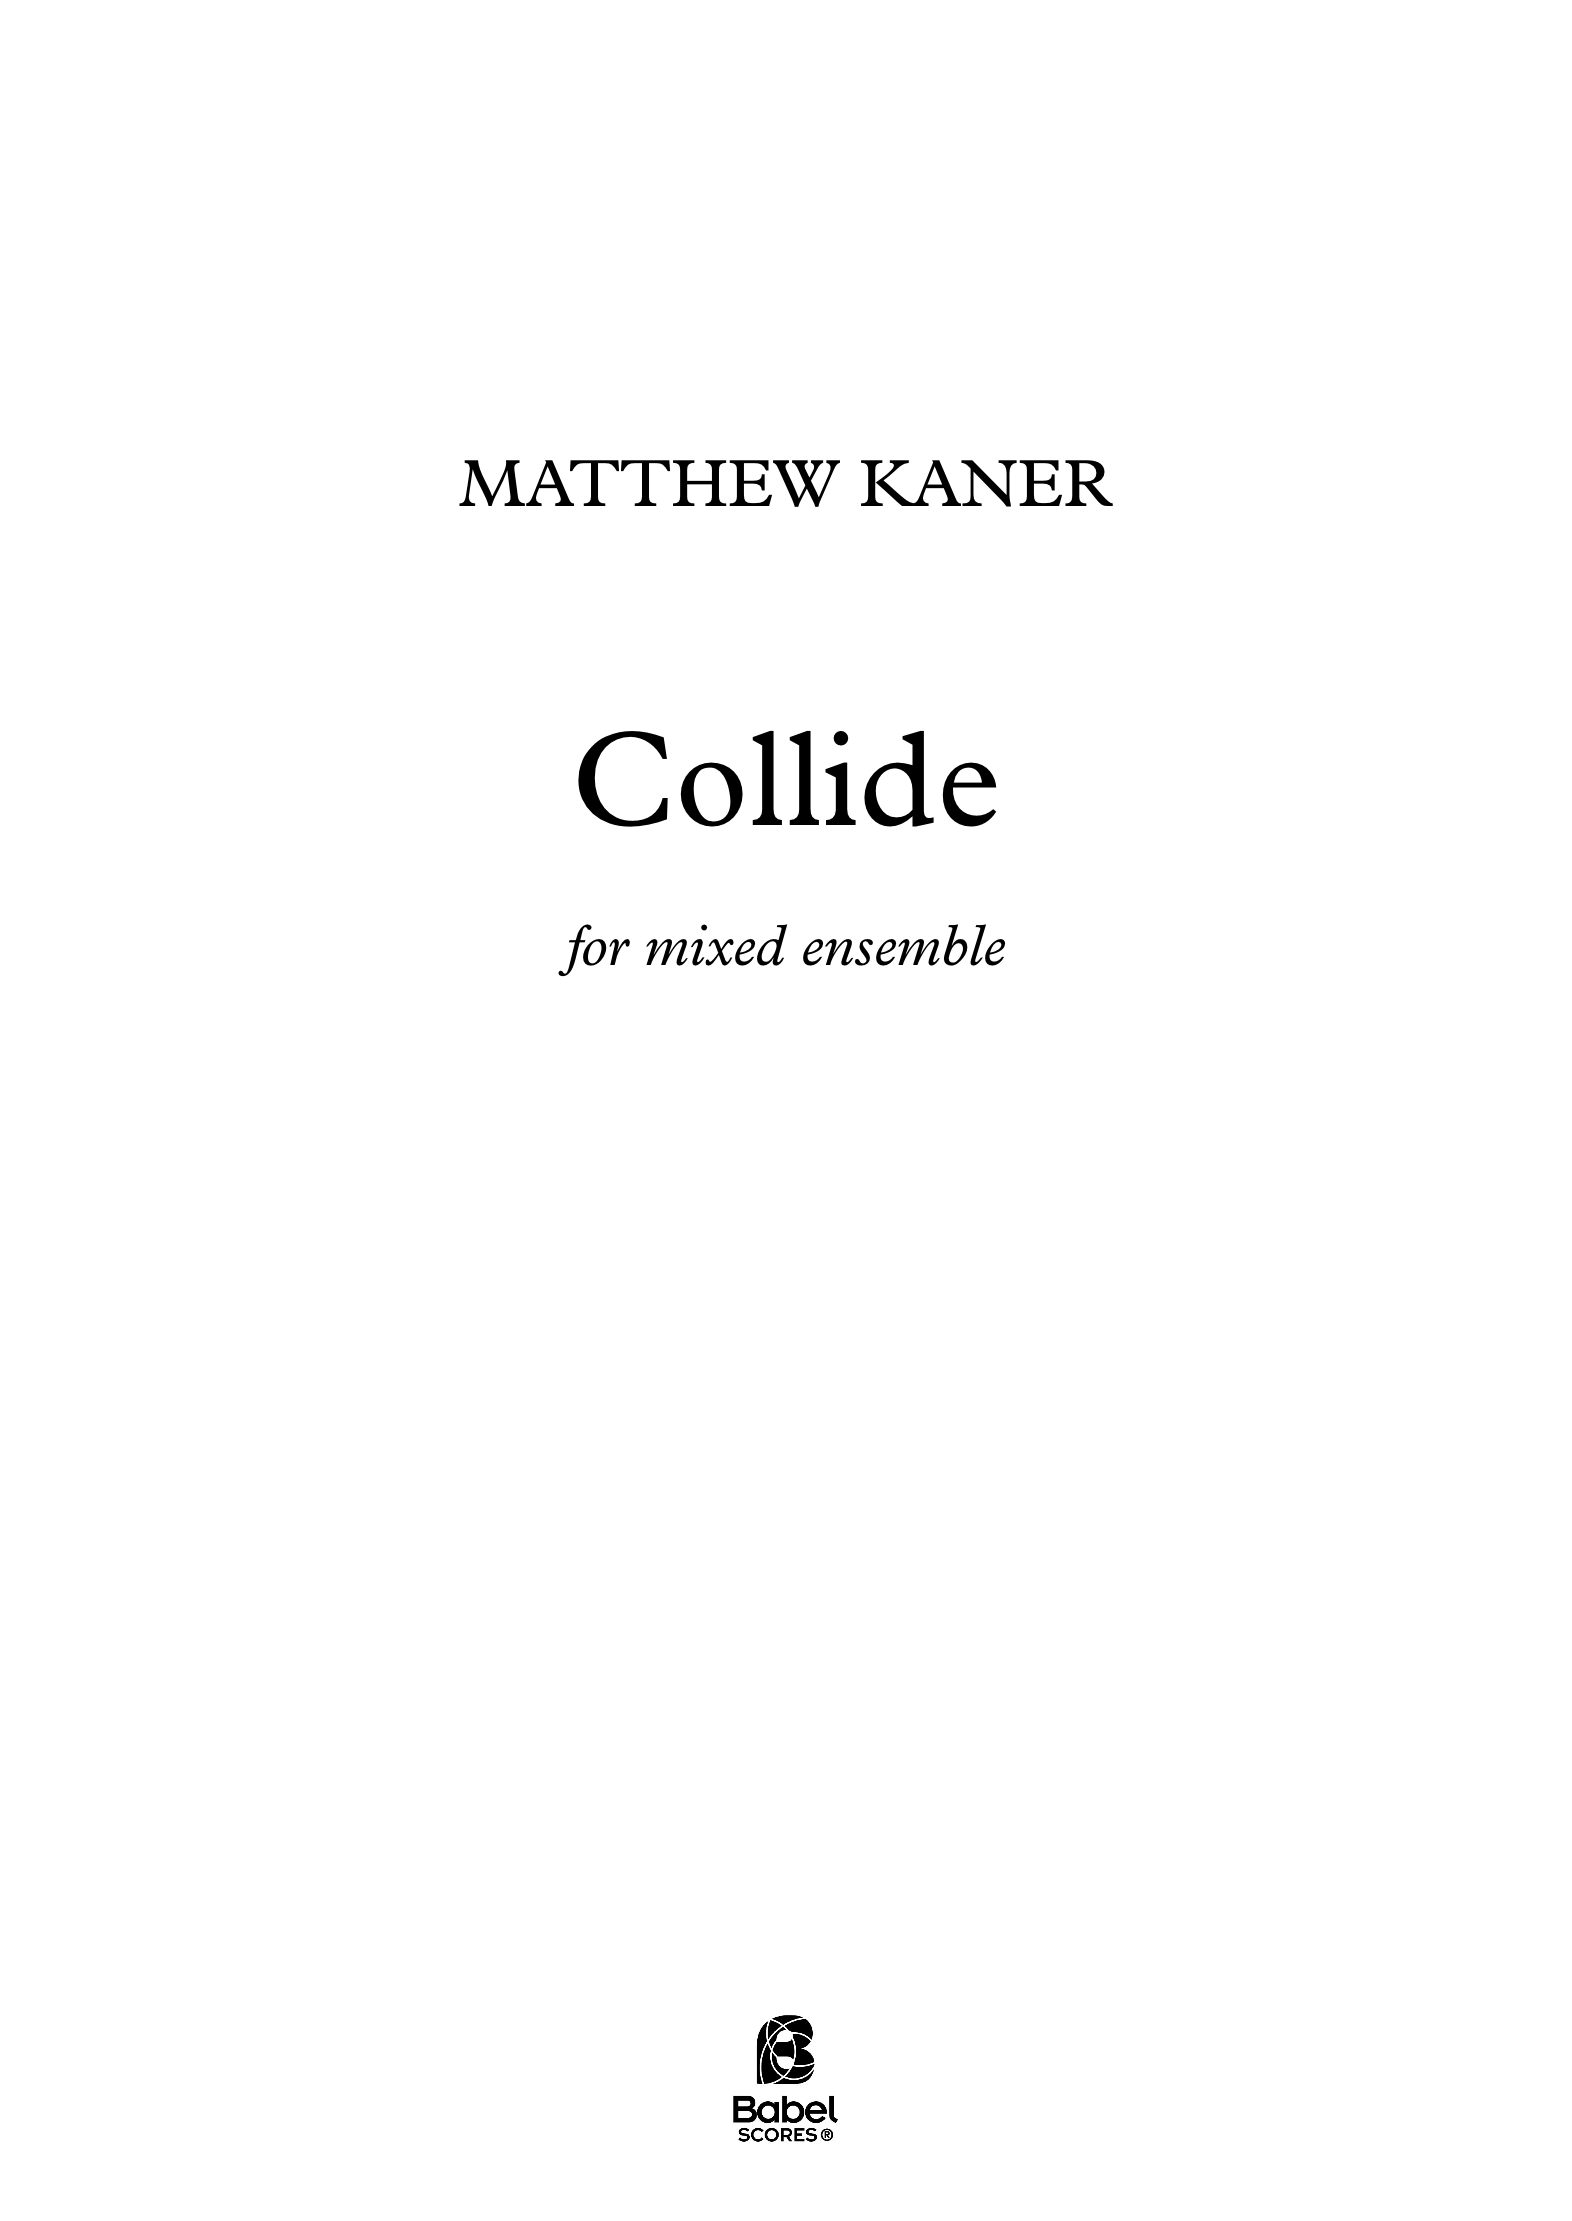 Collide Full Score A4 z 2 21 455